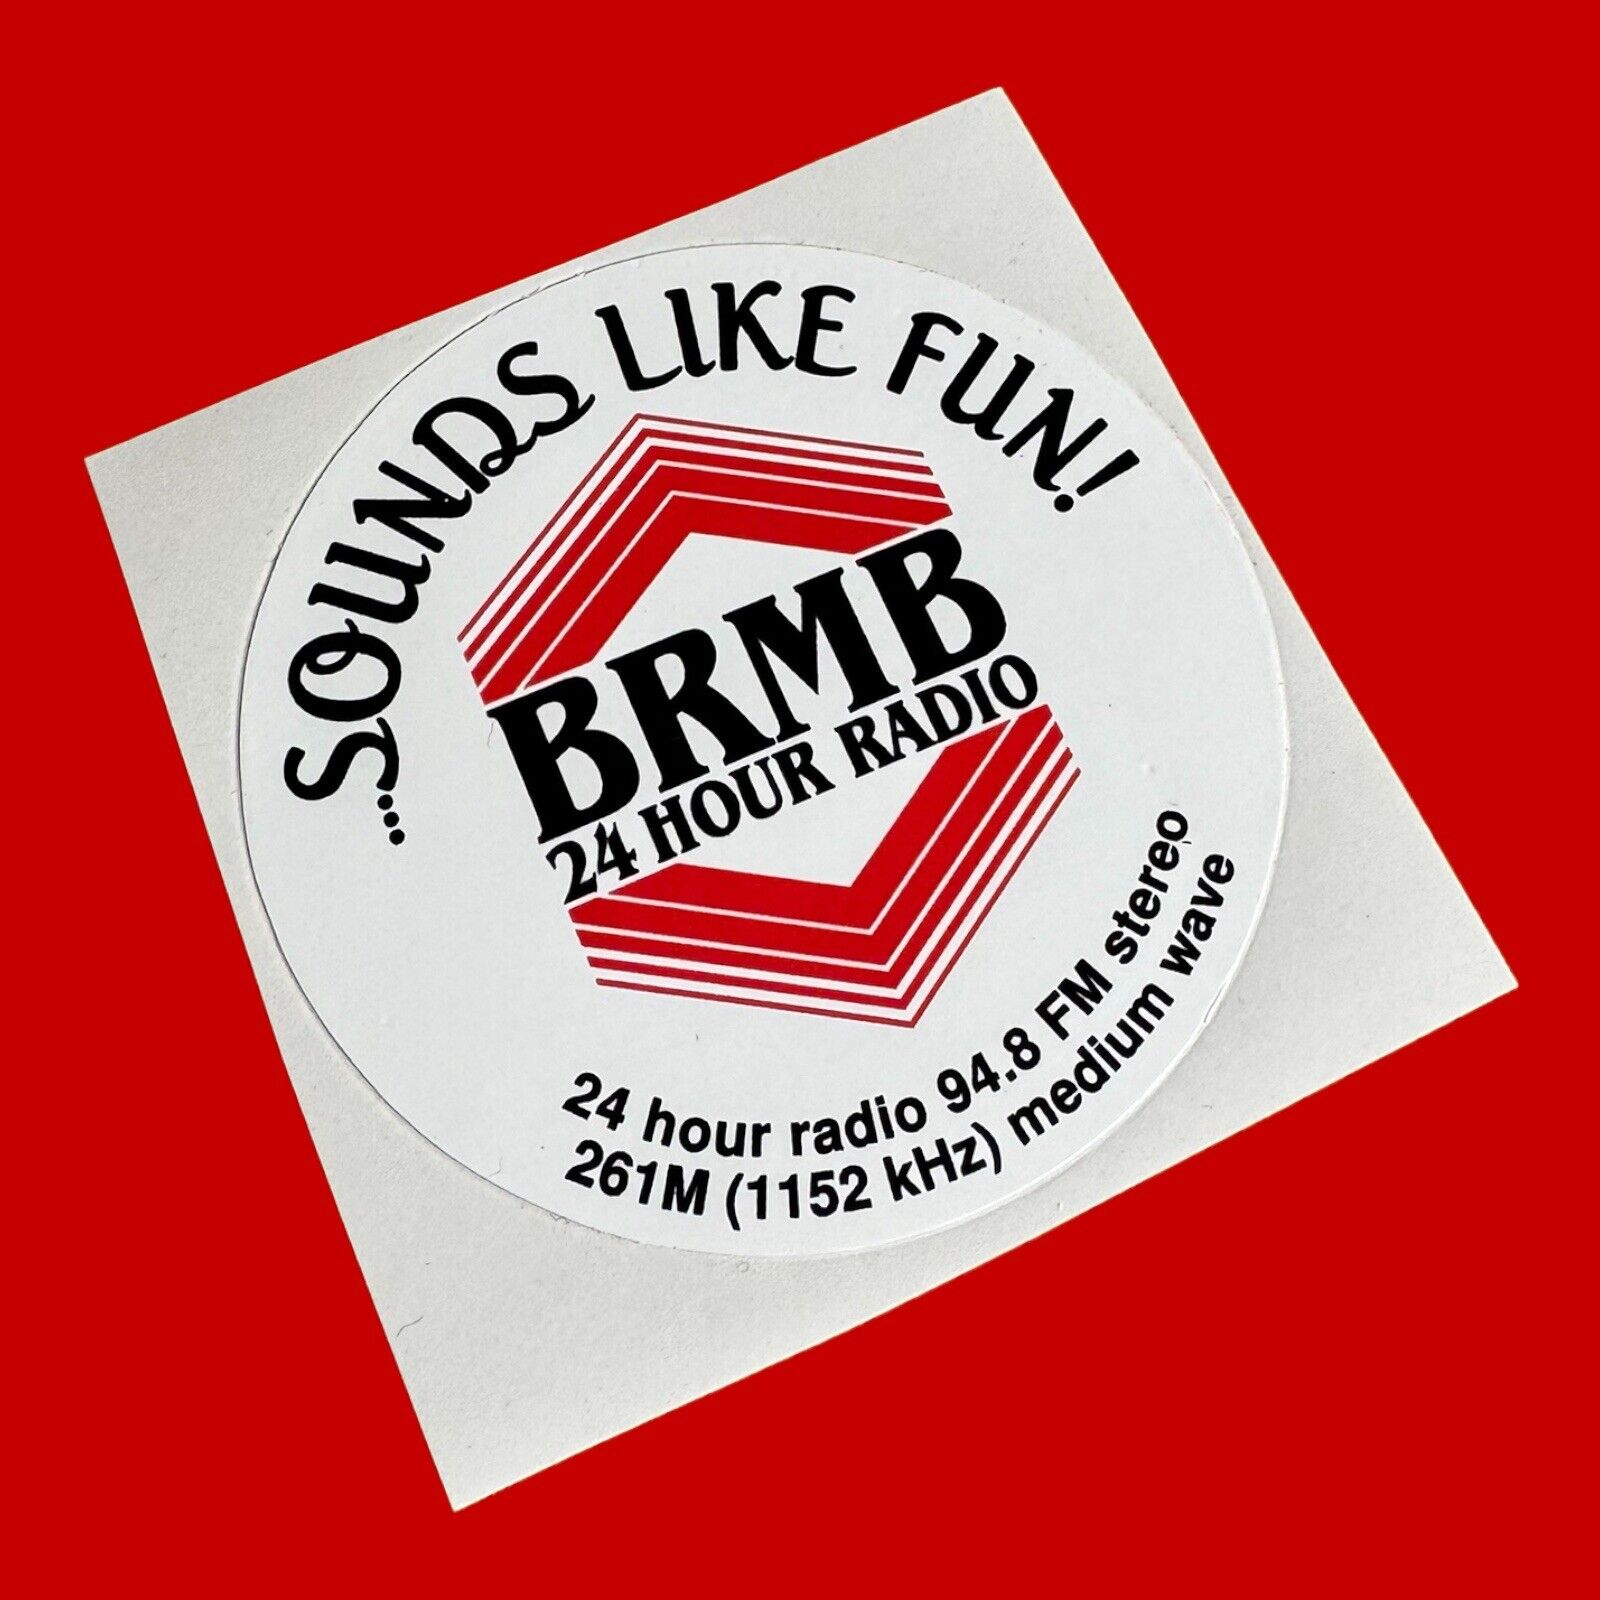 Vintage Radio BRMB 94.8 FM Station Window Vinyl Sticker 60s 70s 80s Classic Fun